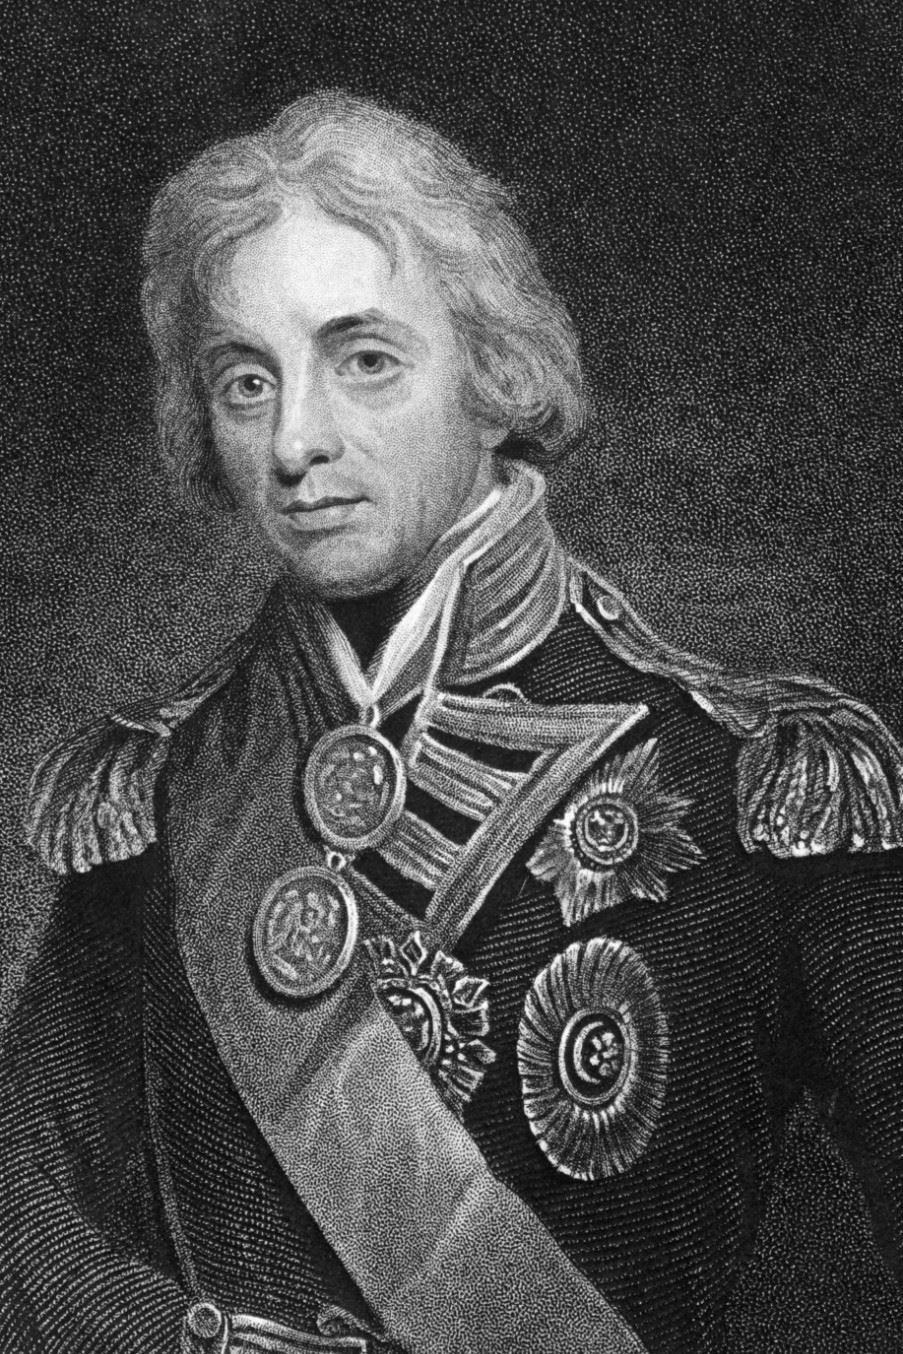 Lord Nelson, Duke of Bronte